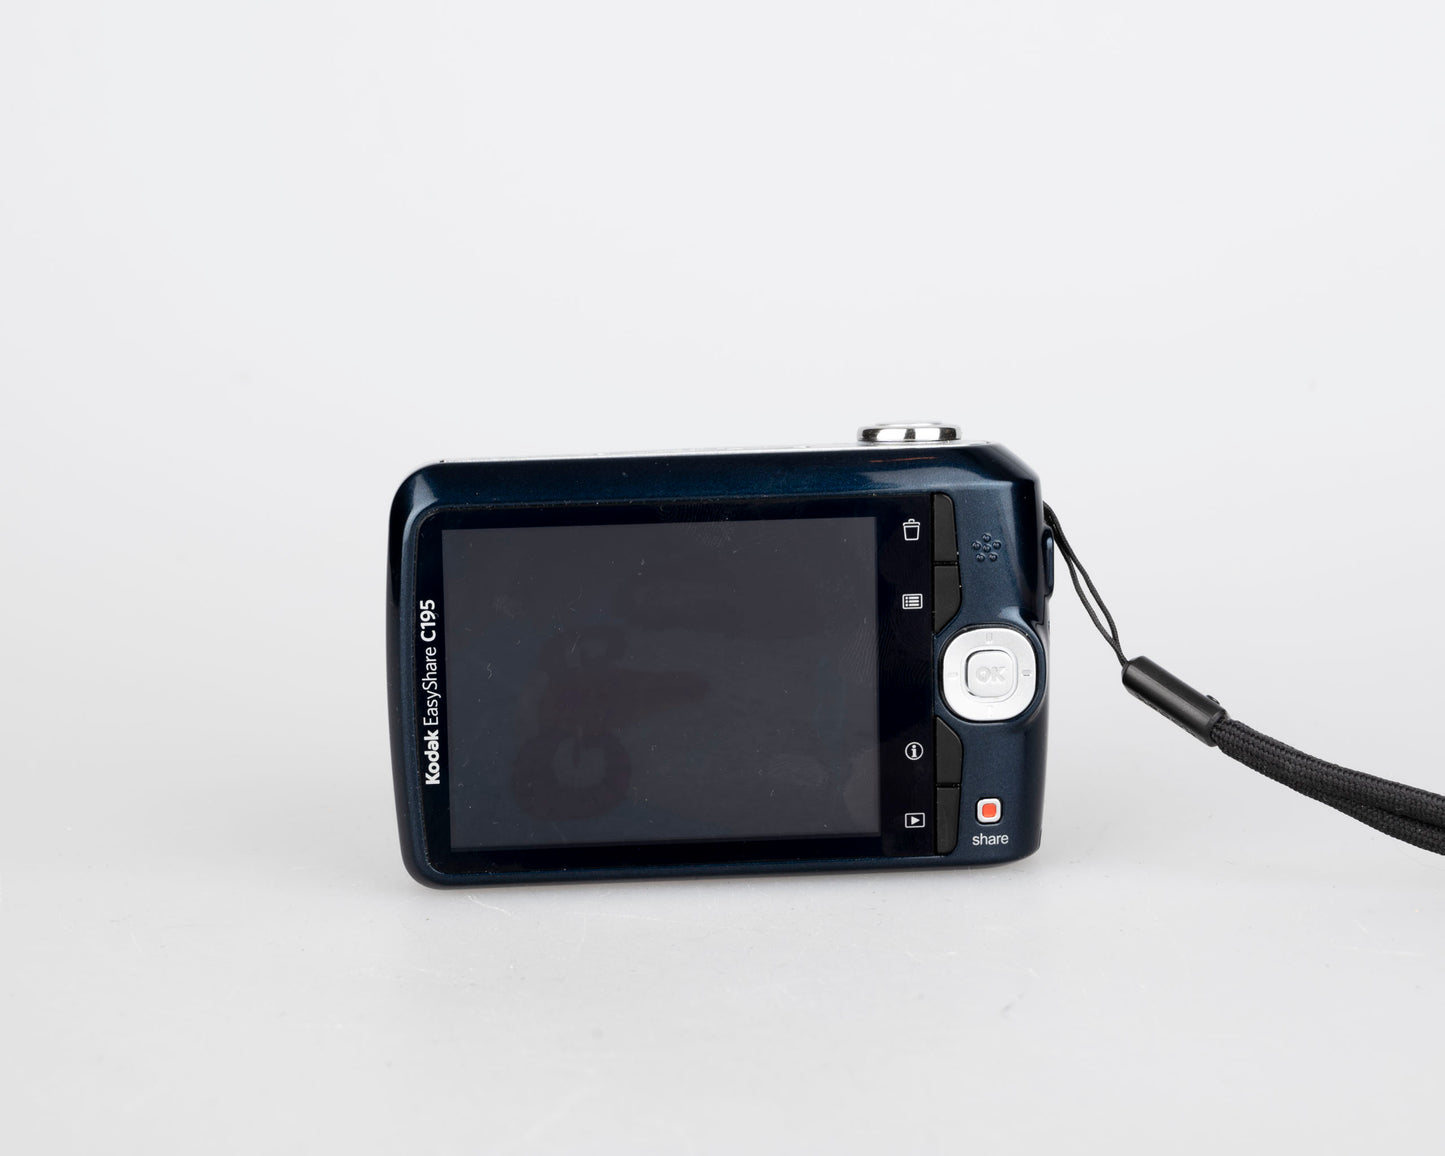 Kodak Easyshare C195 digicam w/ 14 MP CCD sensor (uses AA batteries and SD memory cards)